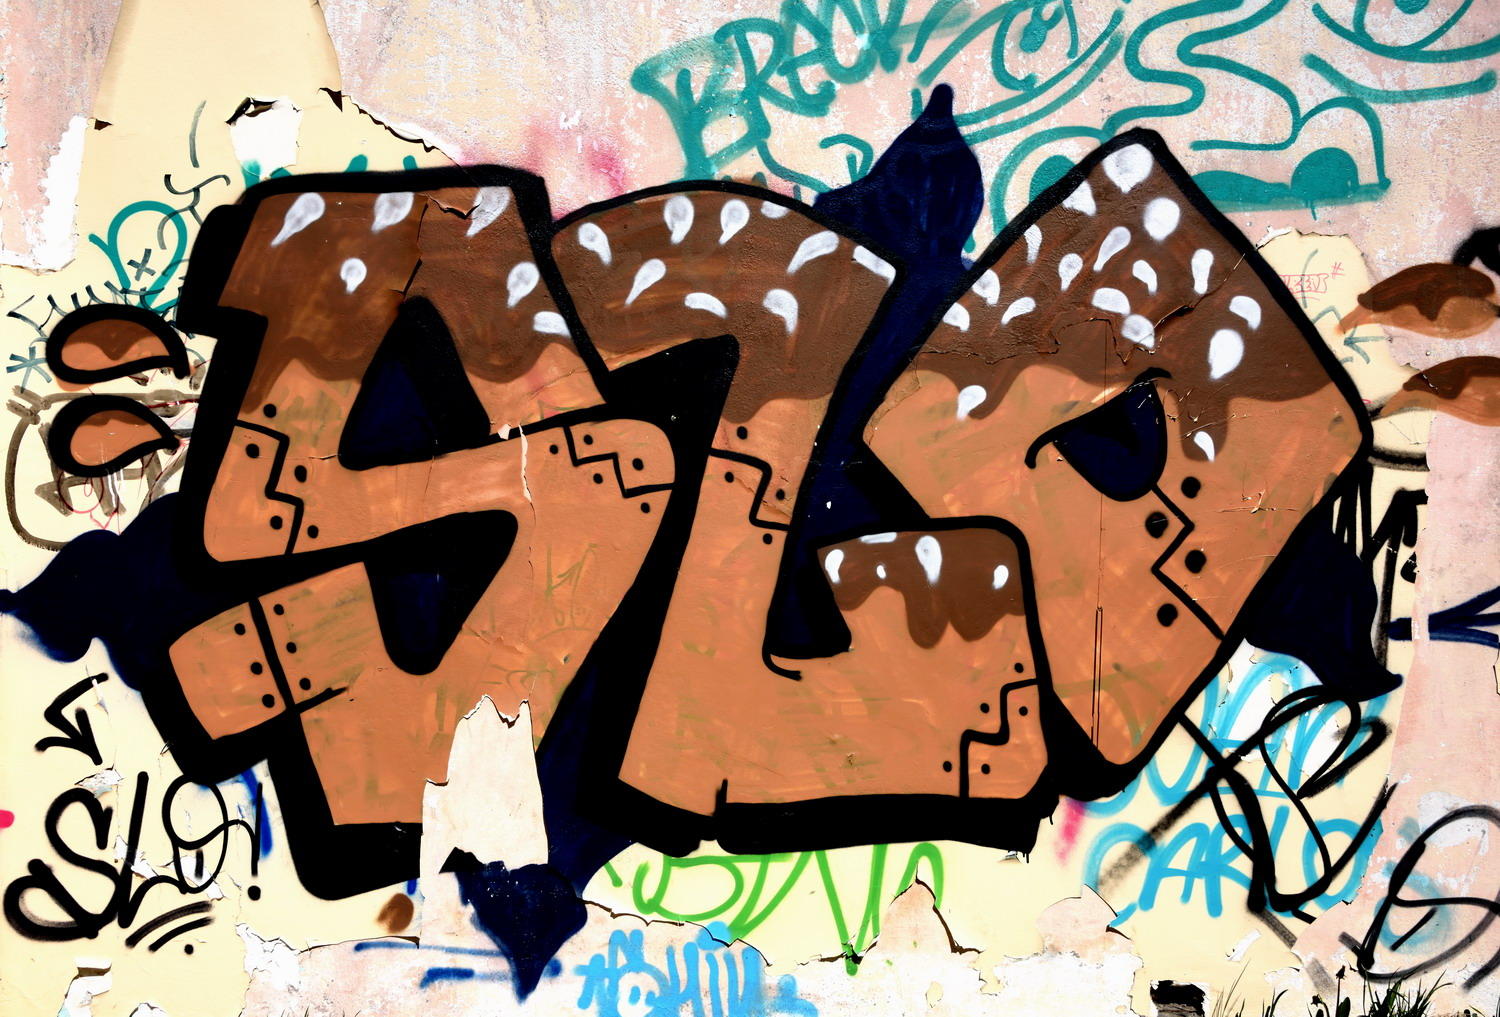 DSC_9355_1A1 - Ushuaia Graffiti